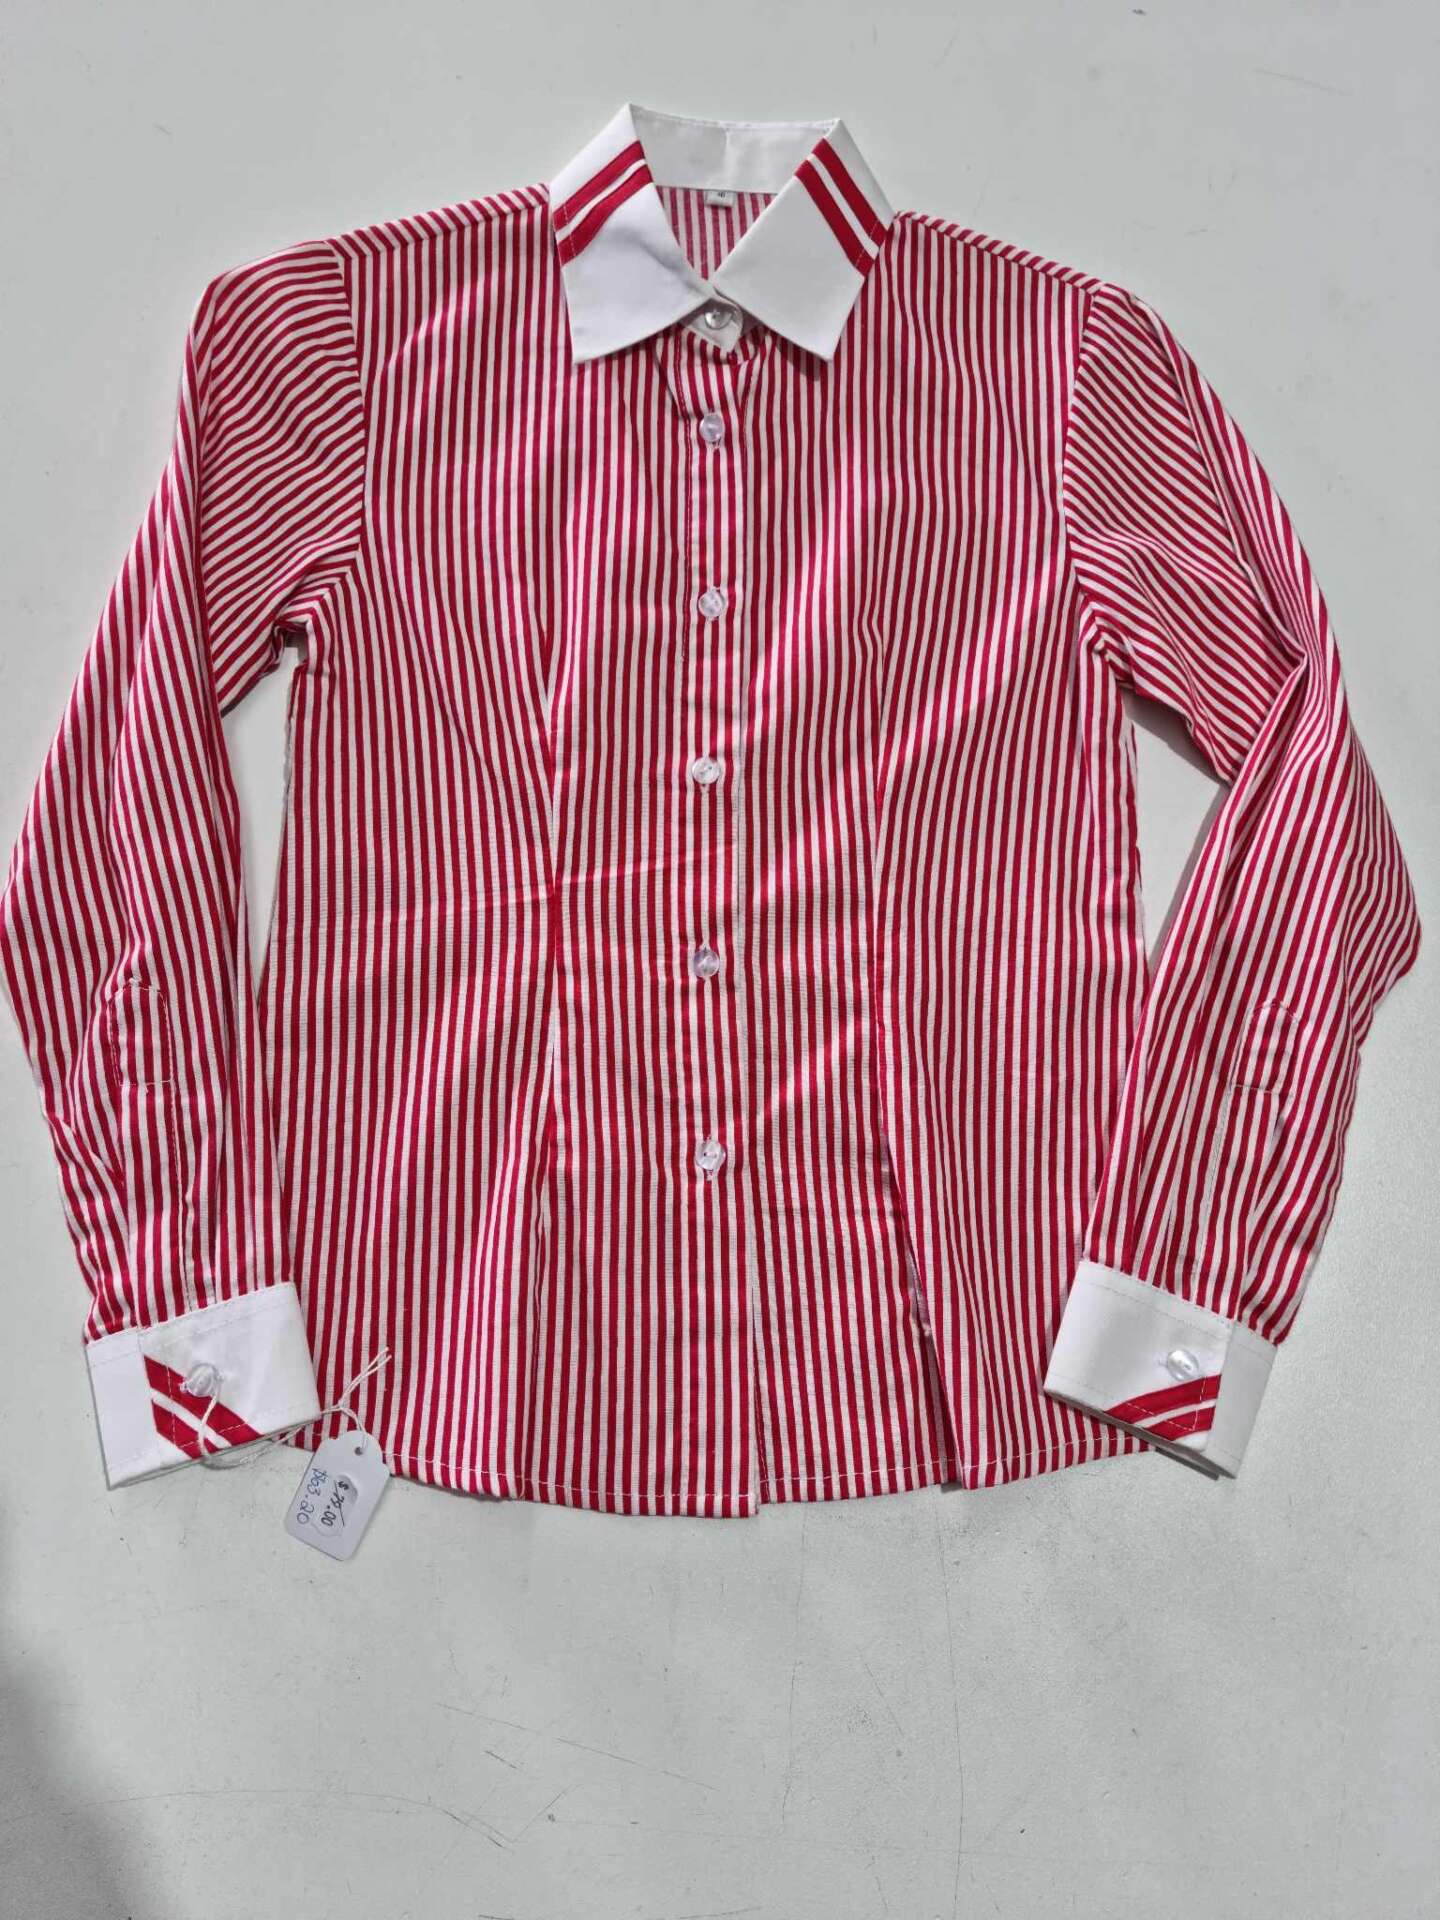 Red Stripe Show Shirt W/ Red Stripe Collar – Kids Size 10